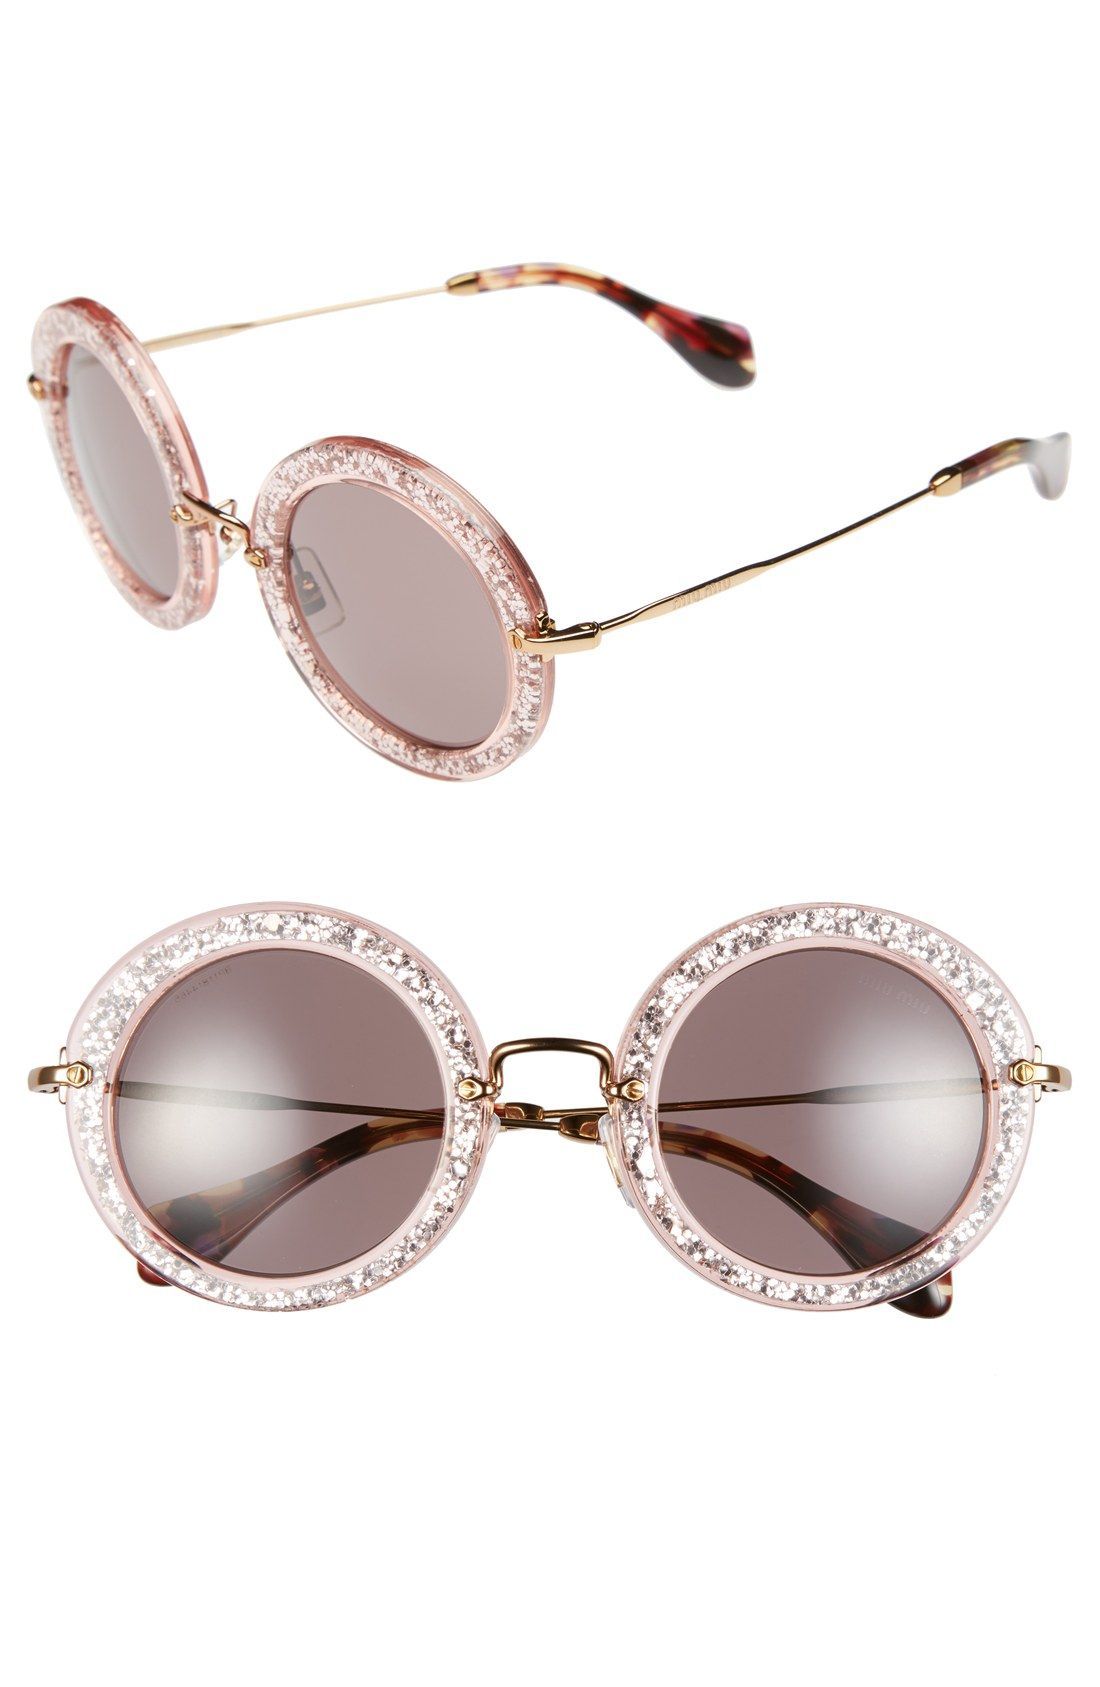 Ray Ban Sunglasses Only $25.99. 2015 Women Fashion Style #rayban #fashion #glasses